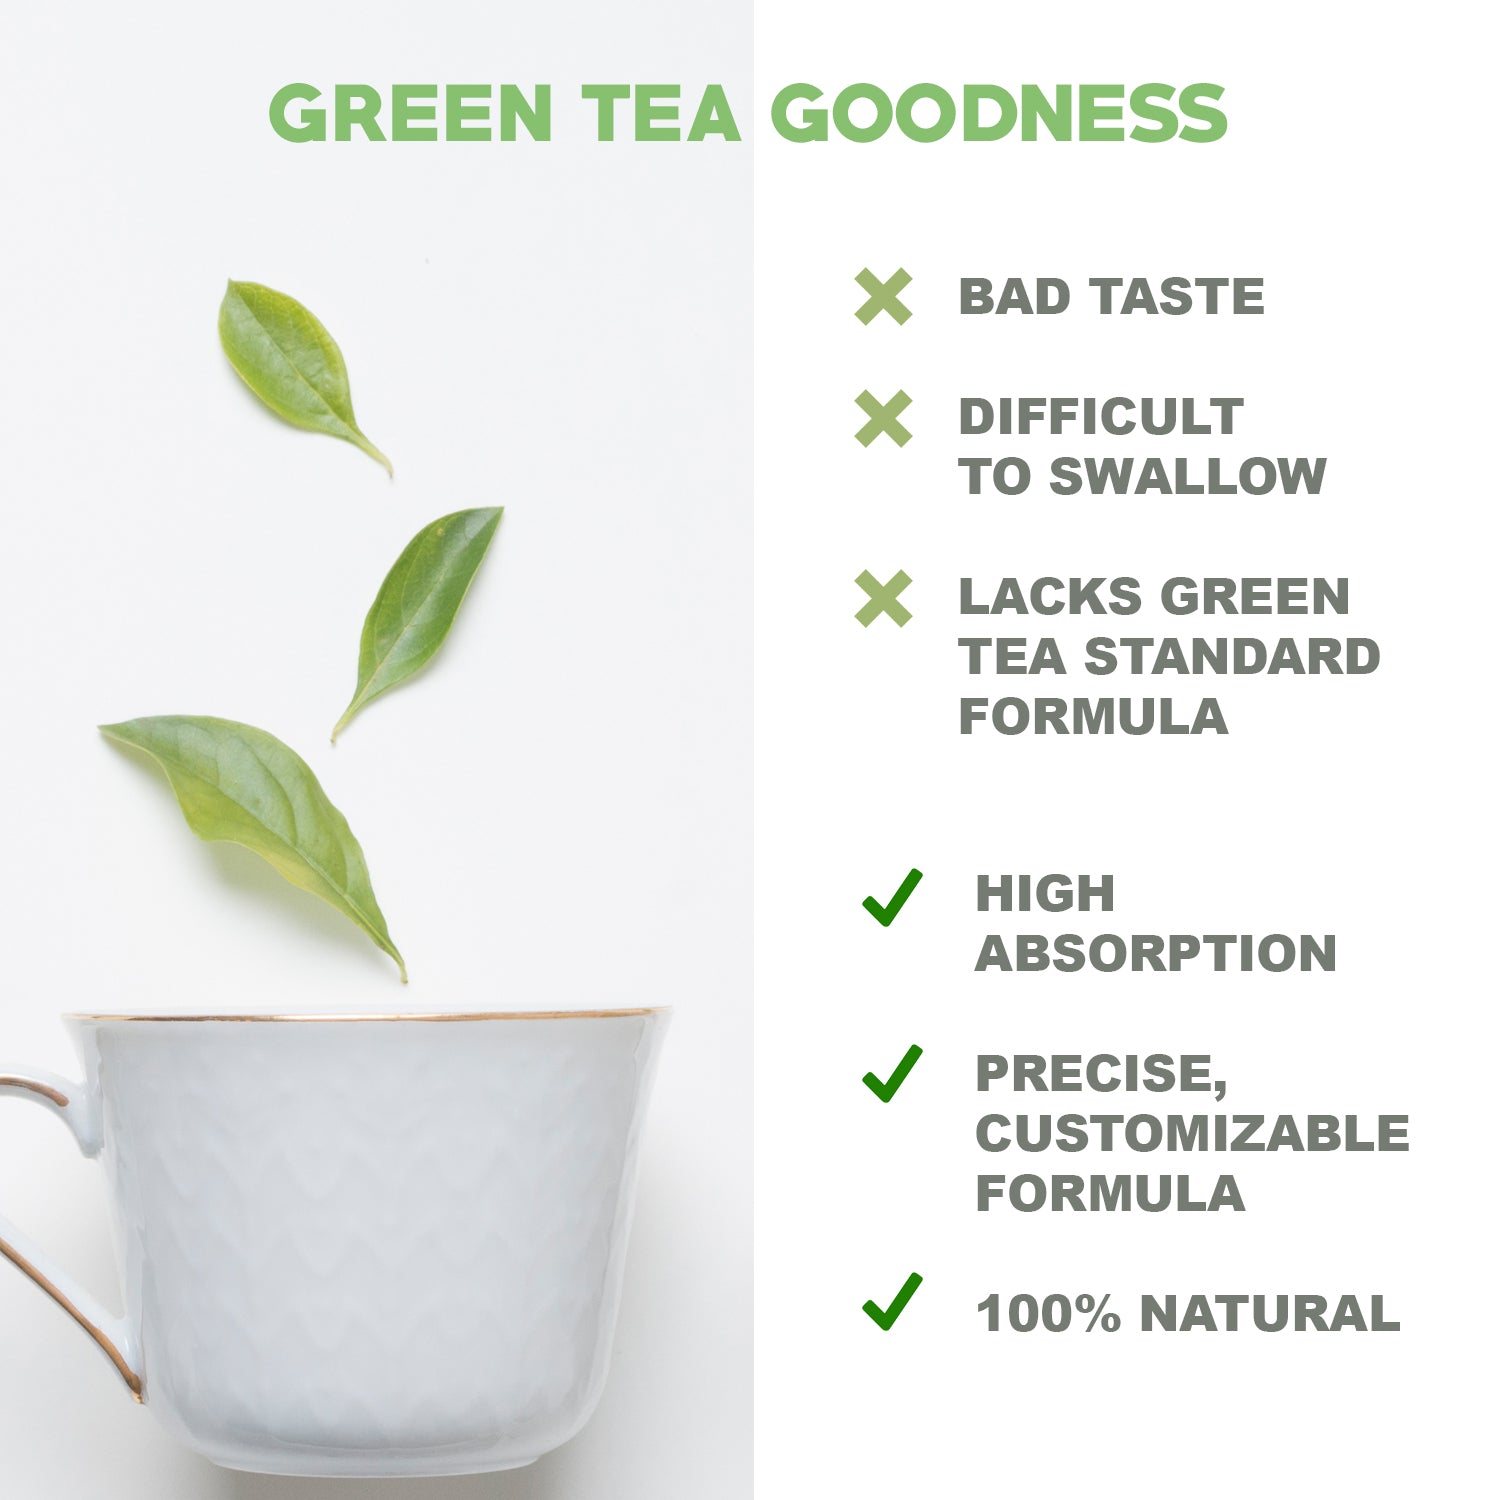 Green tea goodness